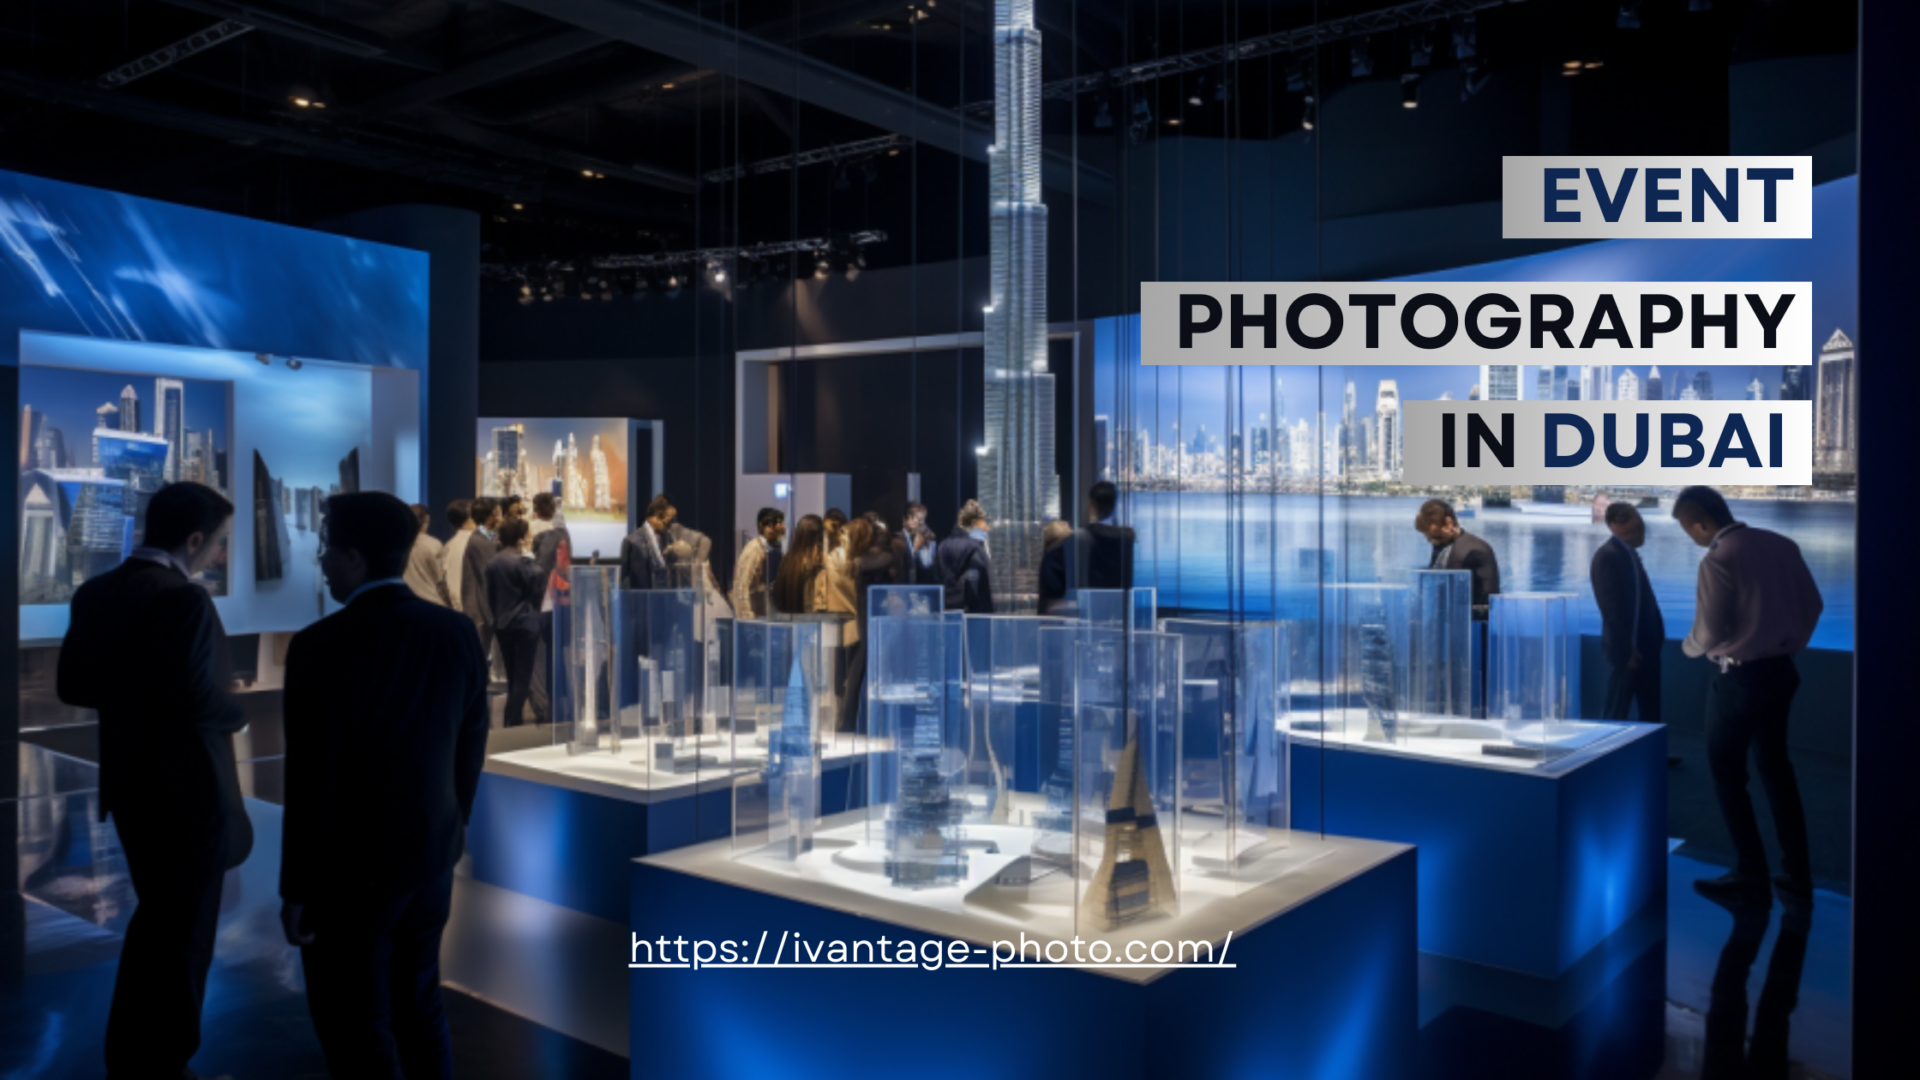 Tech Innovations on Display: Dubai World Trade Center Exhibition by ivan Cherkashin - event photographer in dubai